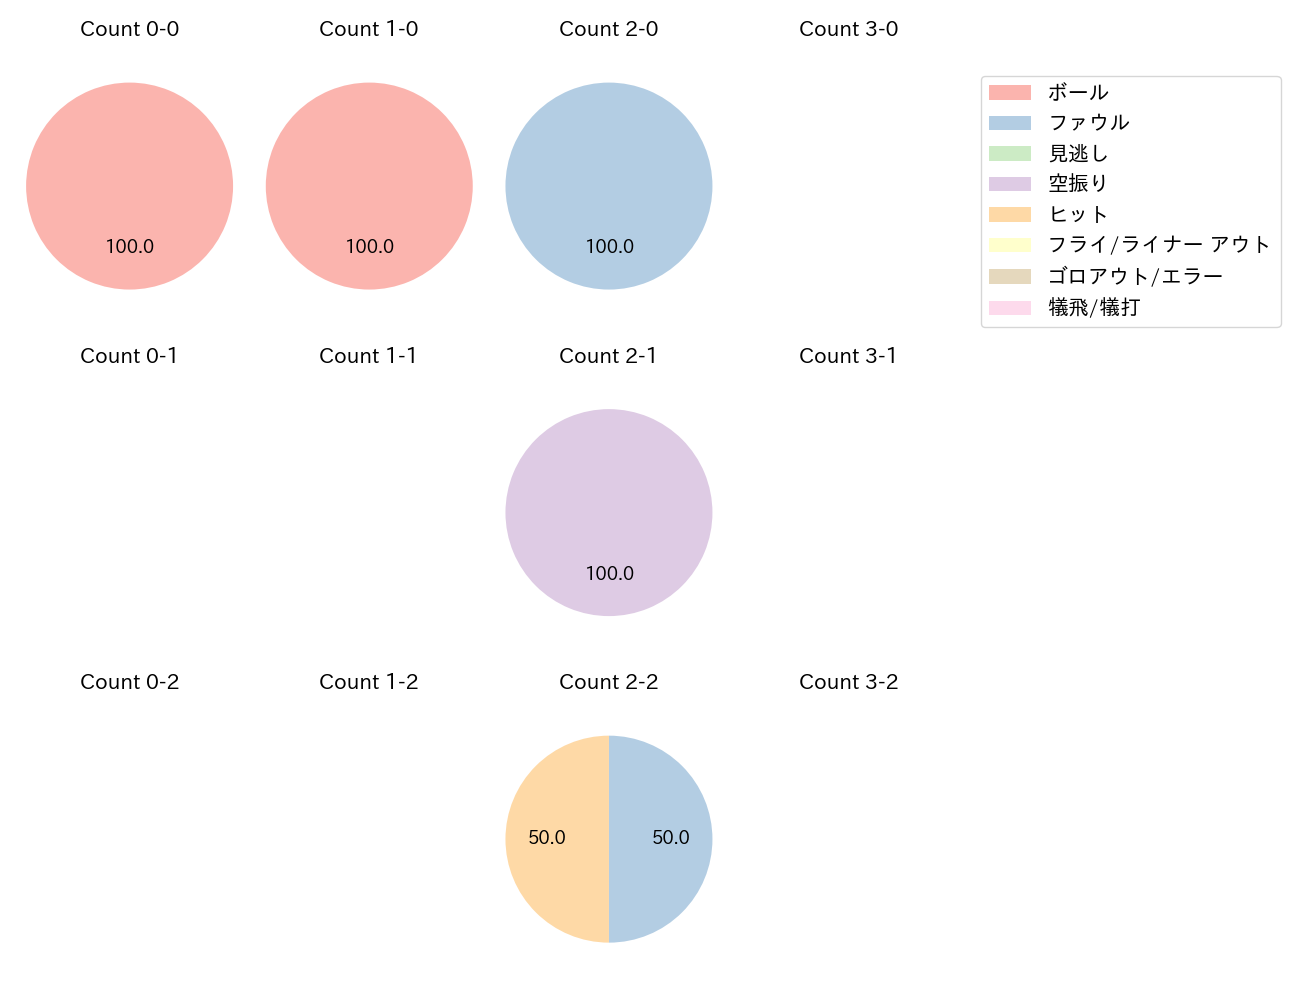 榮枝 裕貴の球数分布(2022年10月)